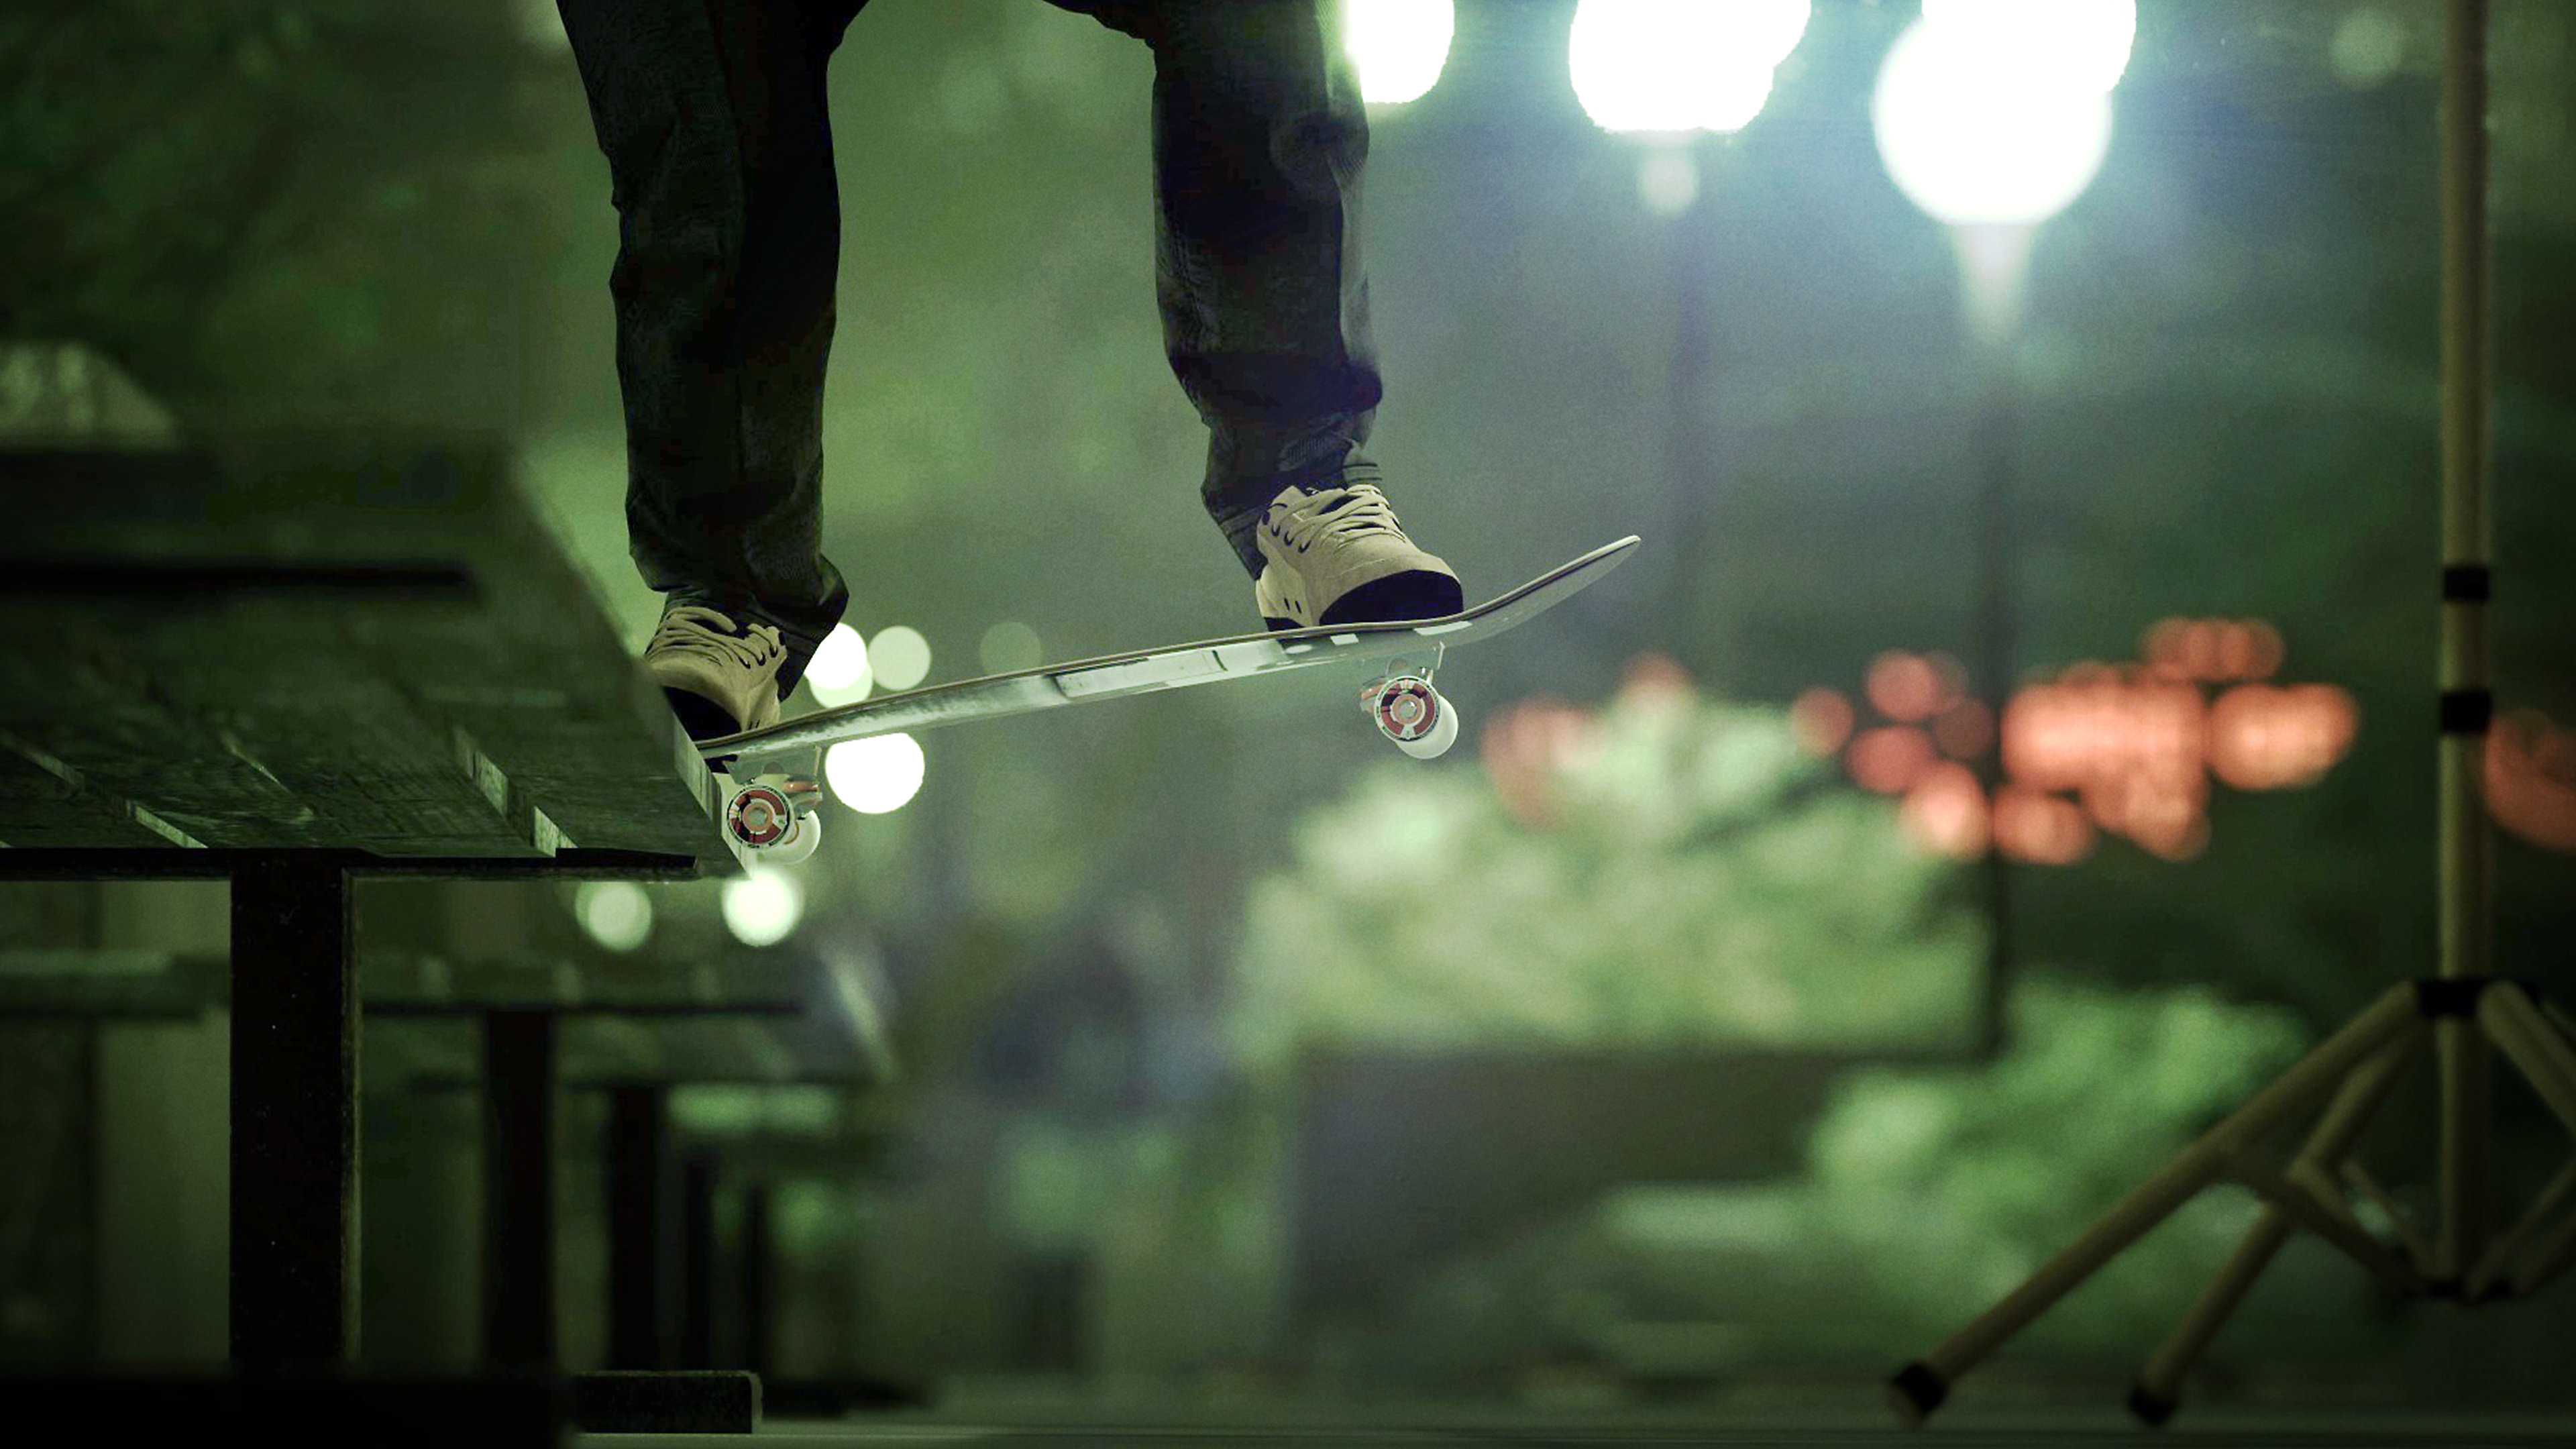 《Session:Skate Sim》螢幕截圖，顯示一名滑板玩家在輾磨長椅